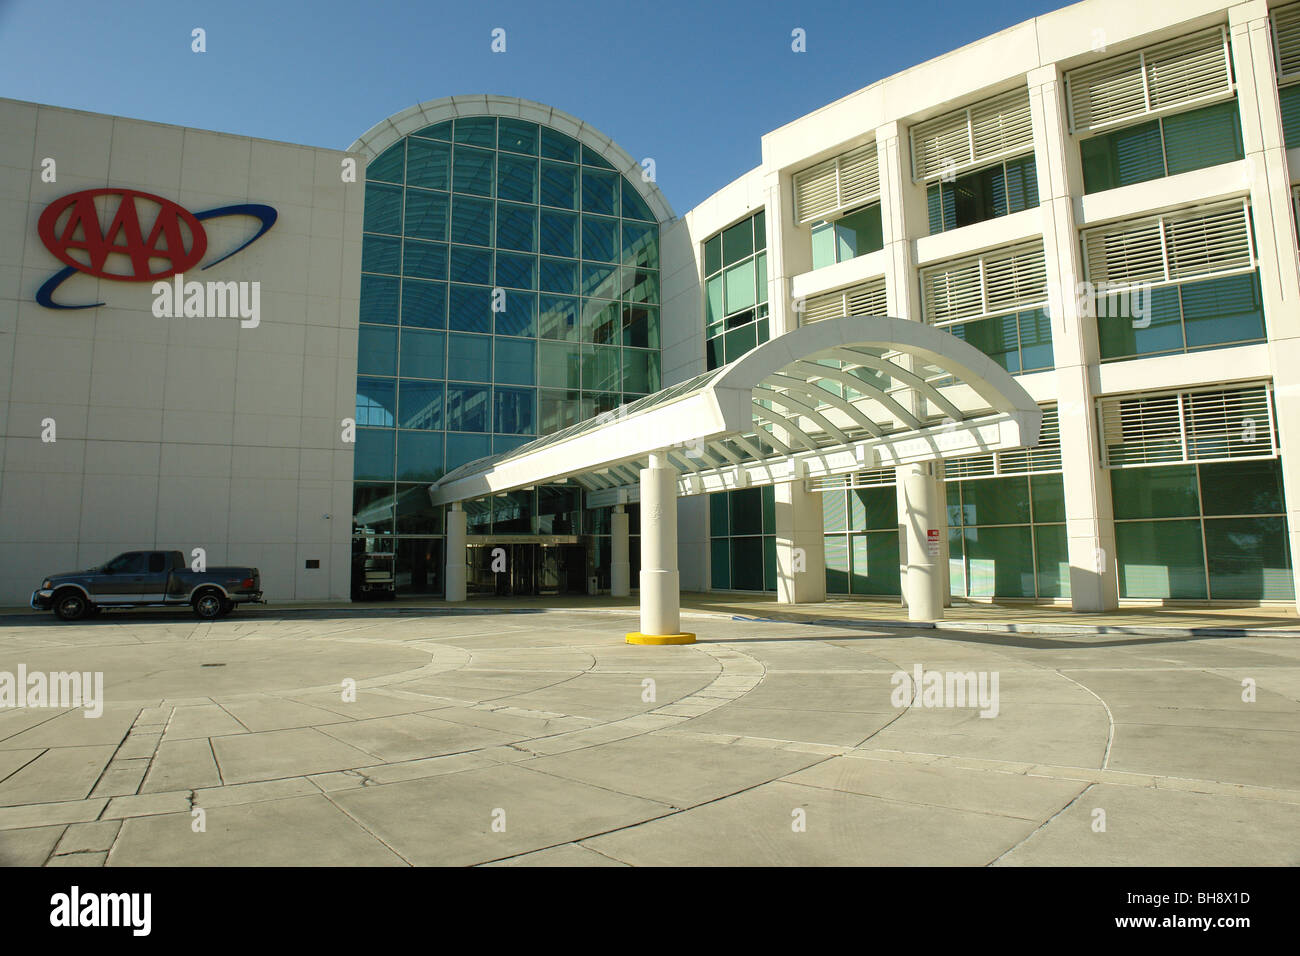 AJD64613, Heathrow, FL, Florida, Orlando, AAA National Office Stock Photo -  Alamy